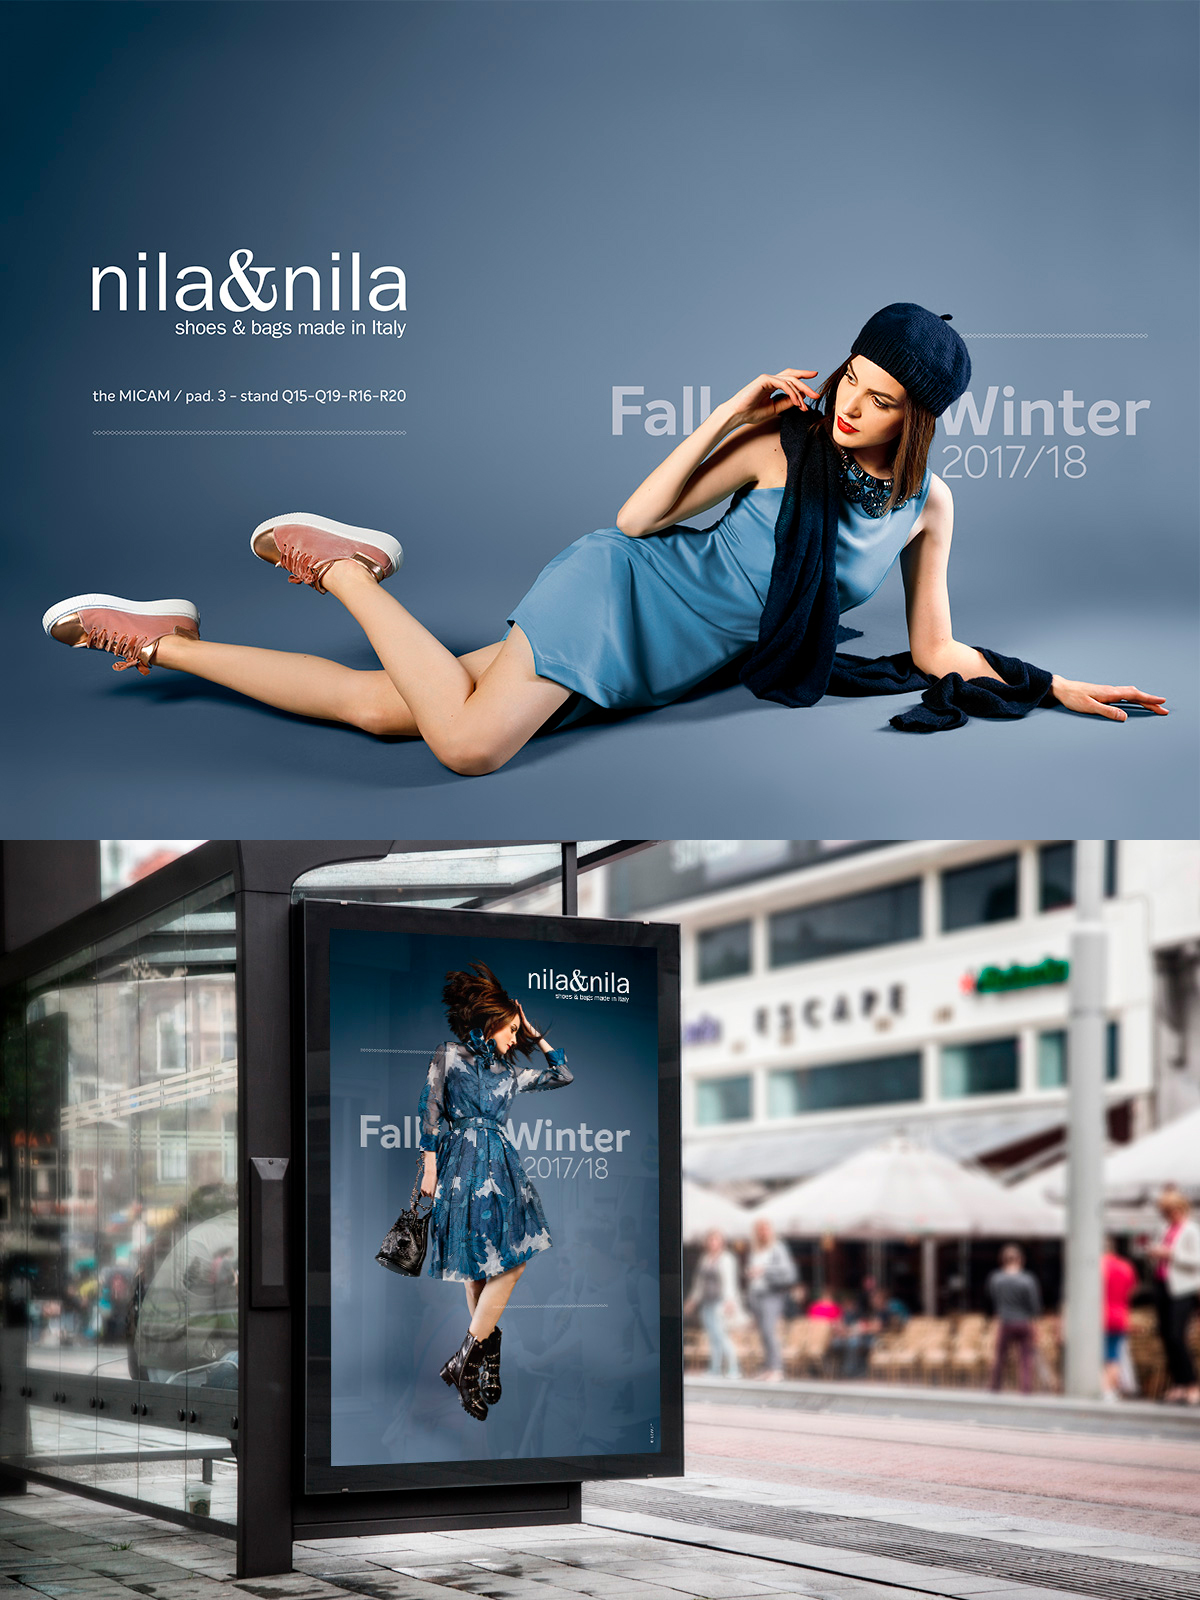 NILA&NILA by Nicola Sancisi - Creative Work